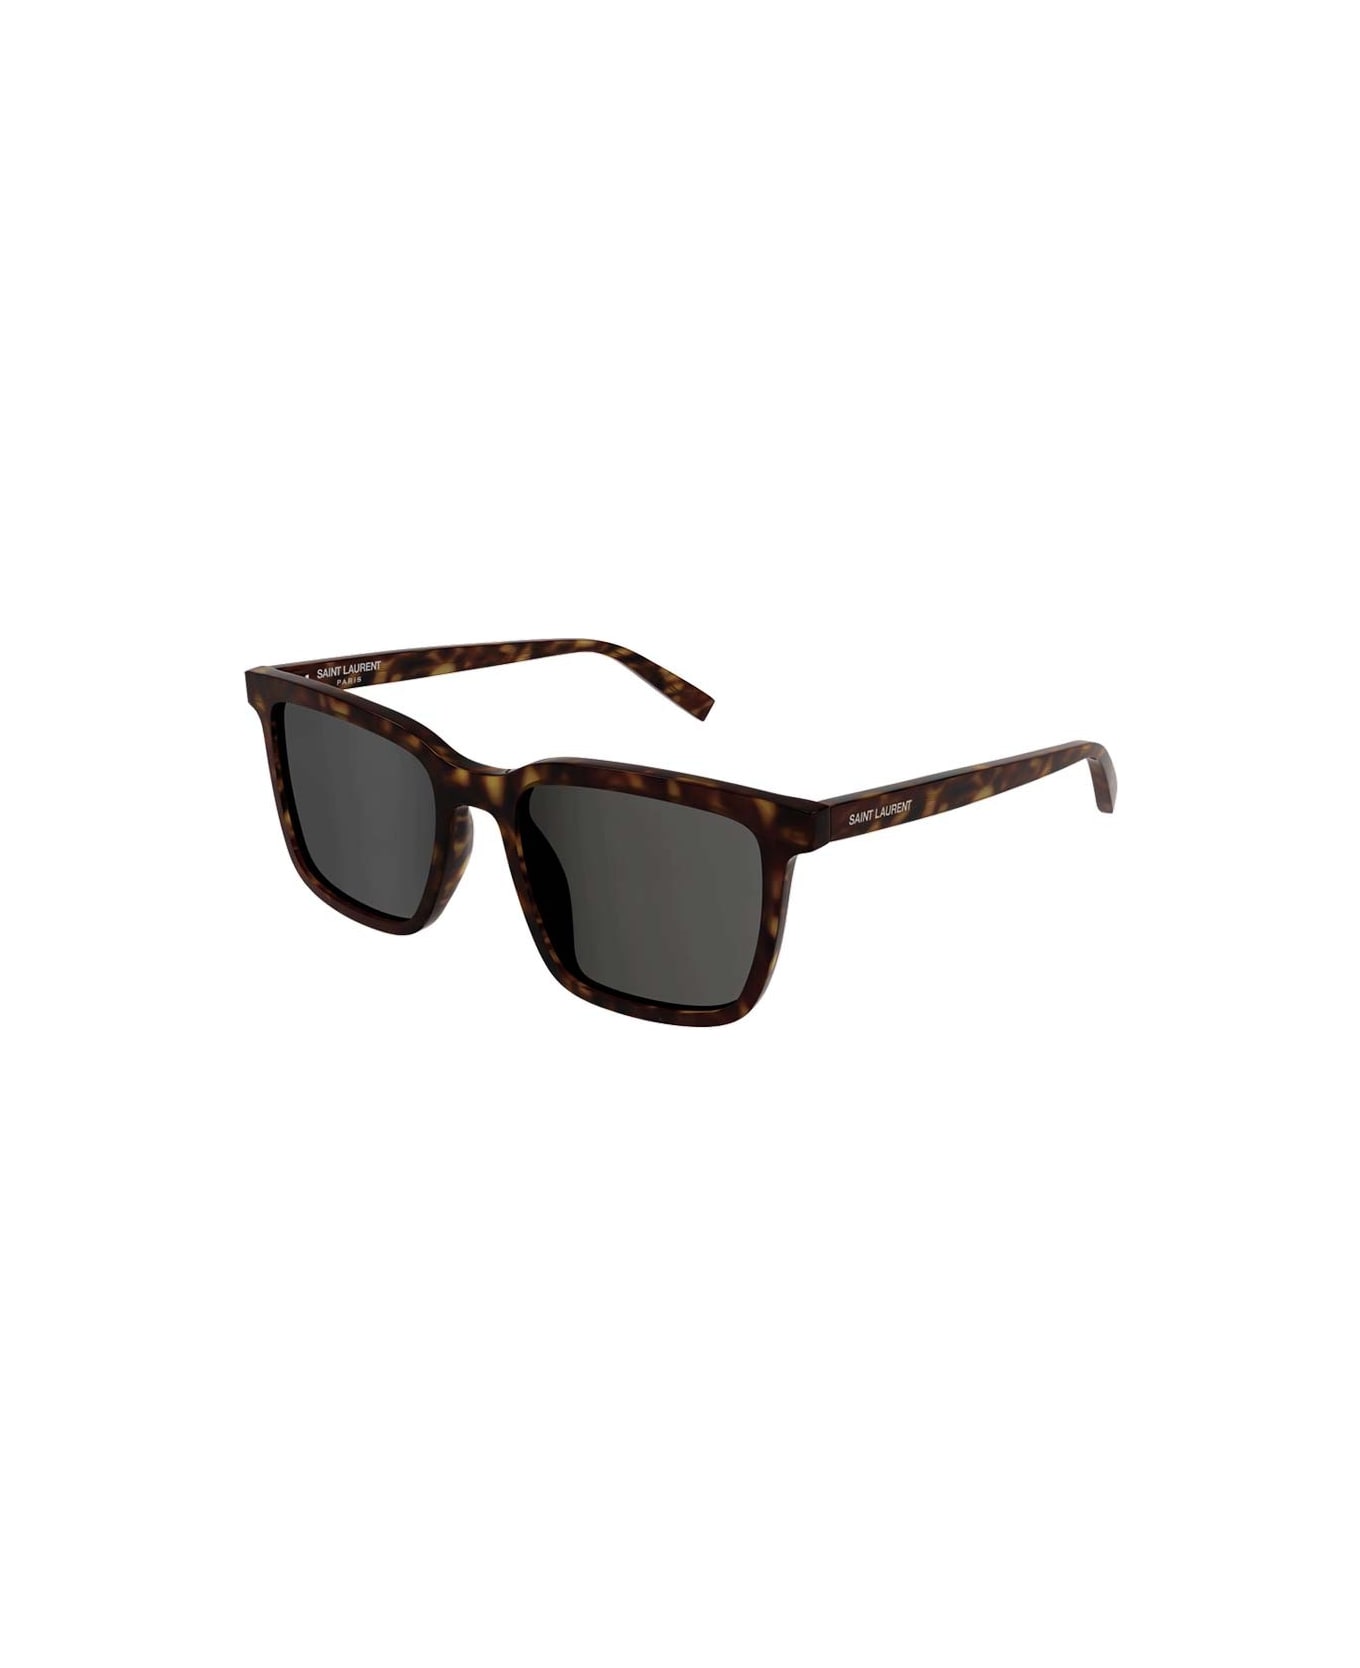 Saint Laurent Eyewear The Sunglasses - Marrone/Grigio